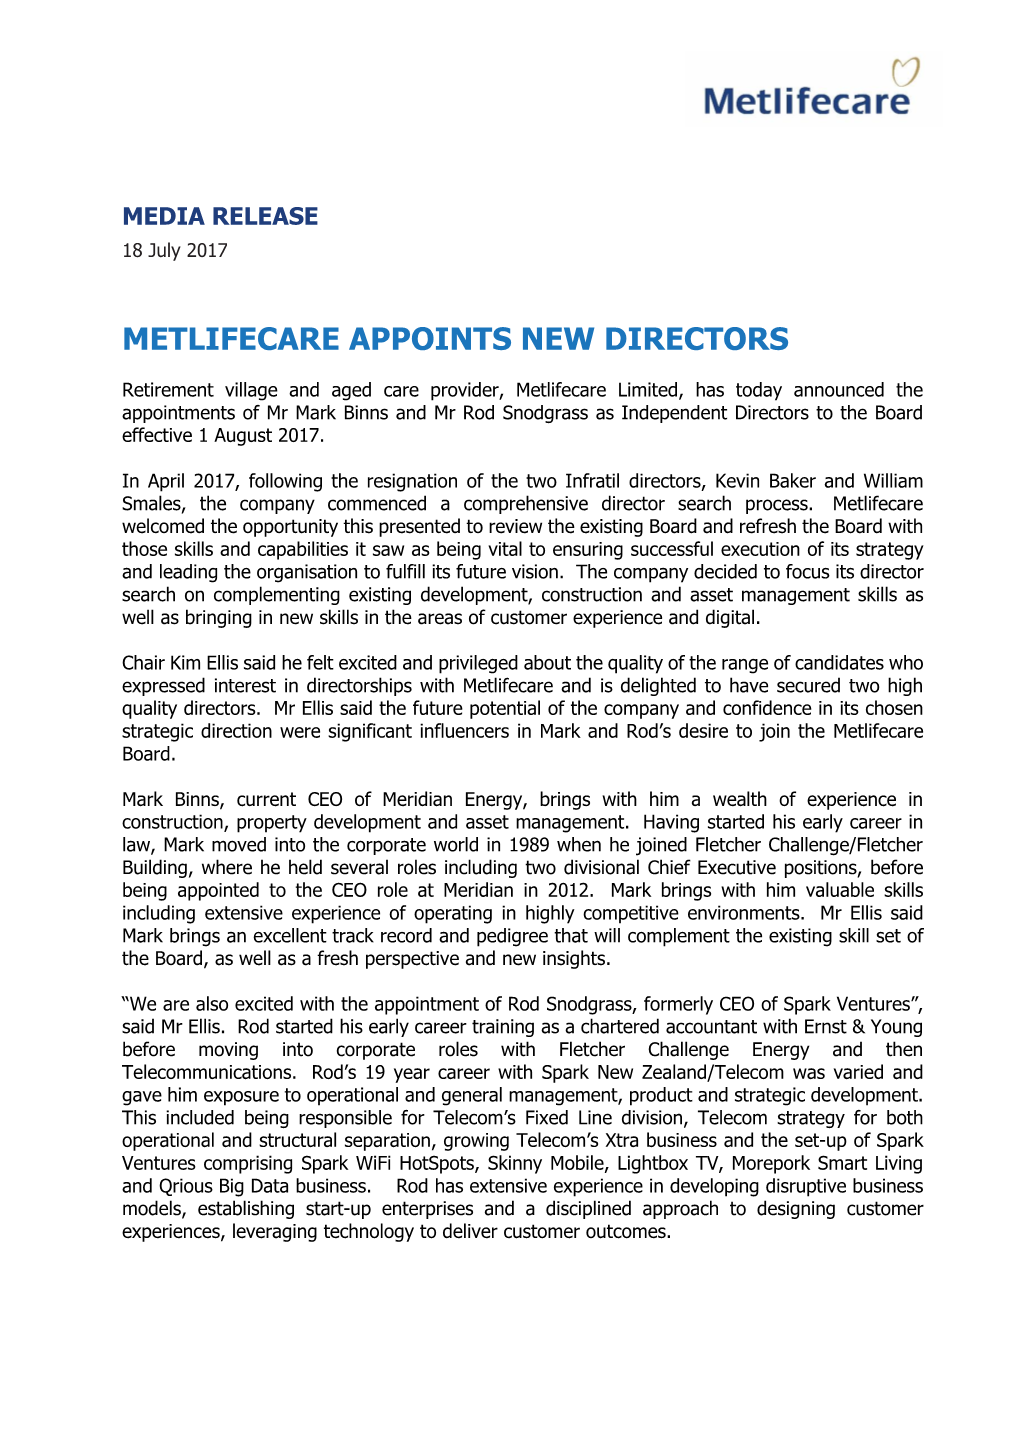 Metlifecare Appoints New Directors